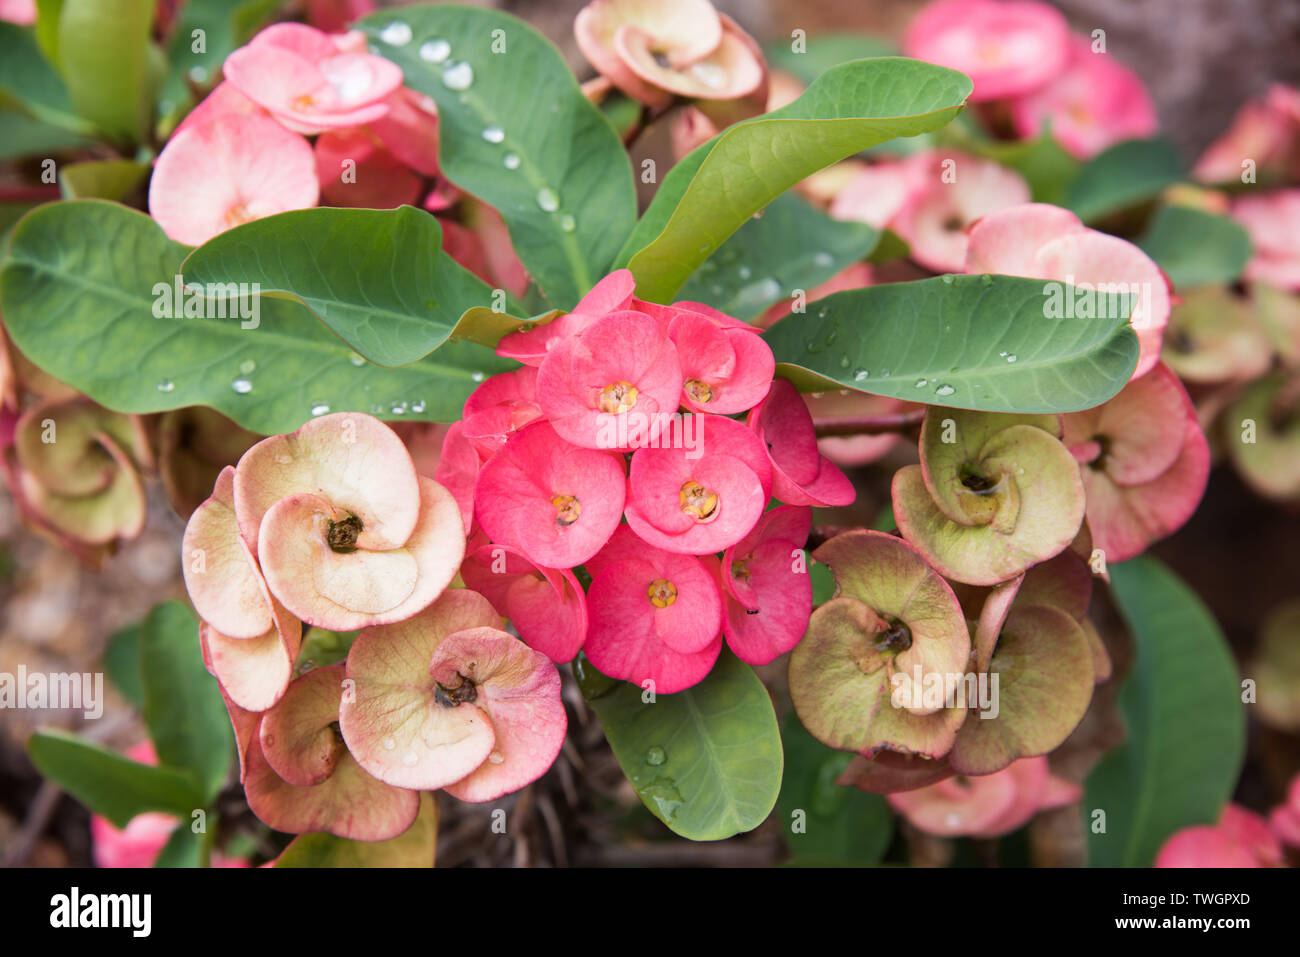 Close-up of pink flowering plant, spurges, growing in desert garden in tropical Darwin, Australia Stock Photo